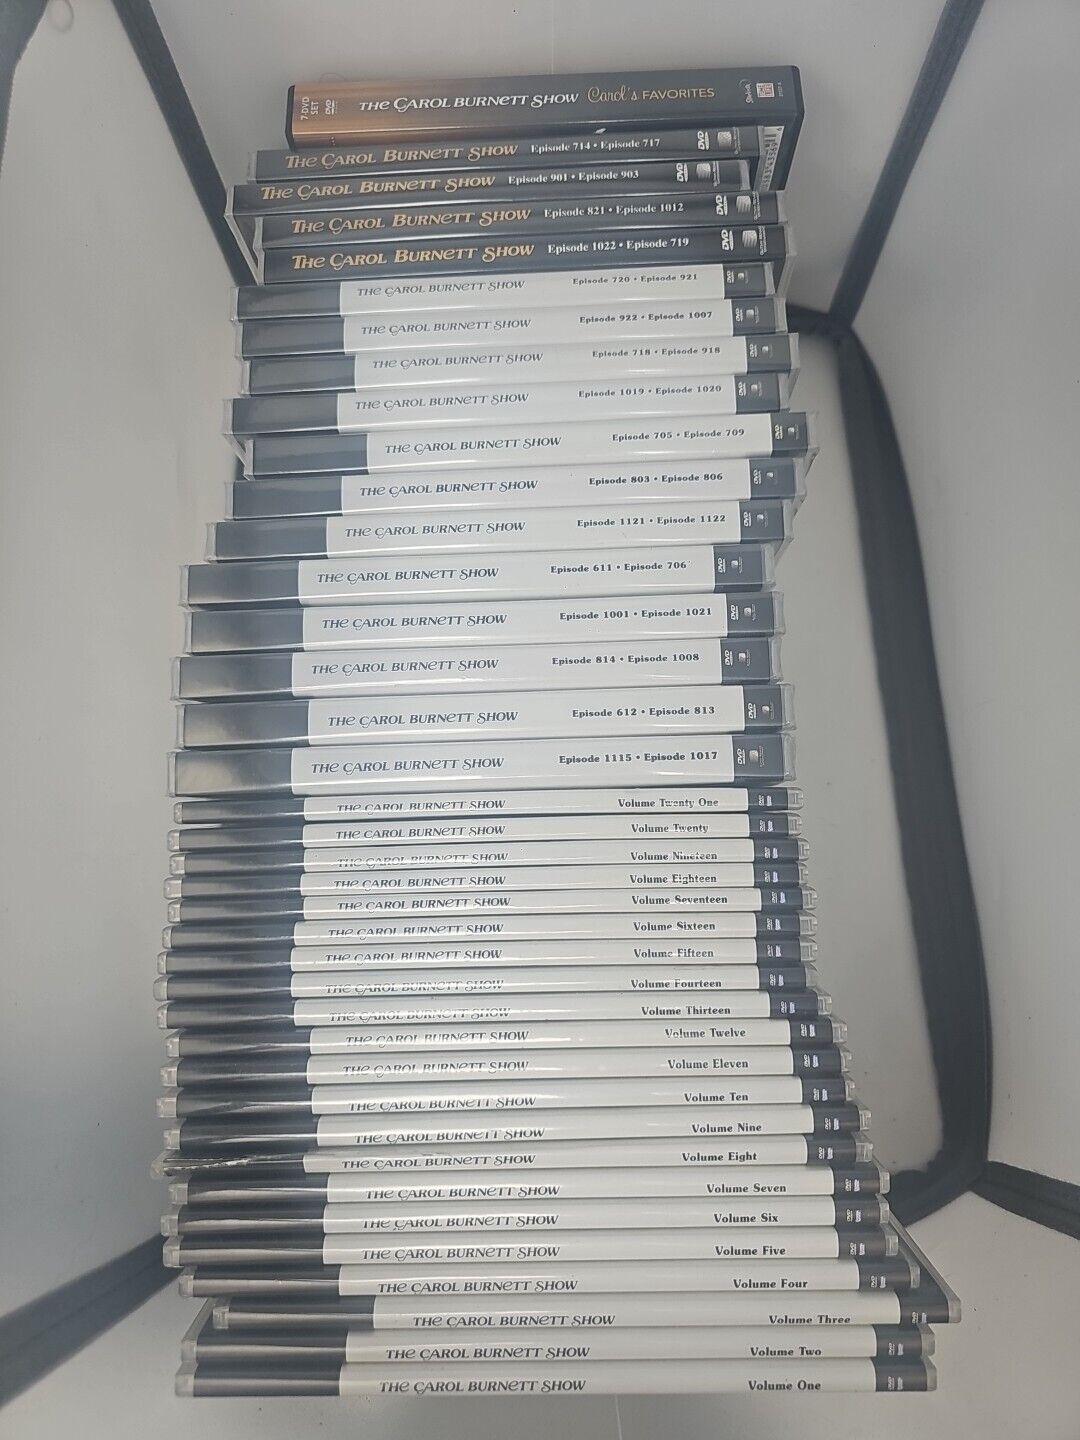 THE CAROL BURNETT SHOW  Collectors Edition  dvd set Vol 1-21 DVDs plus 17 More